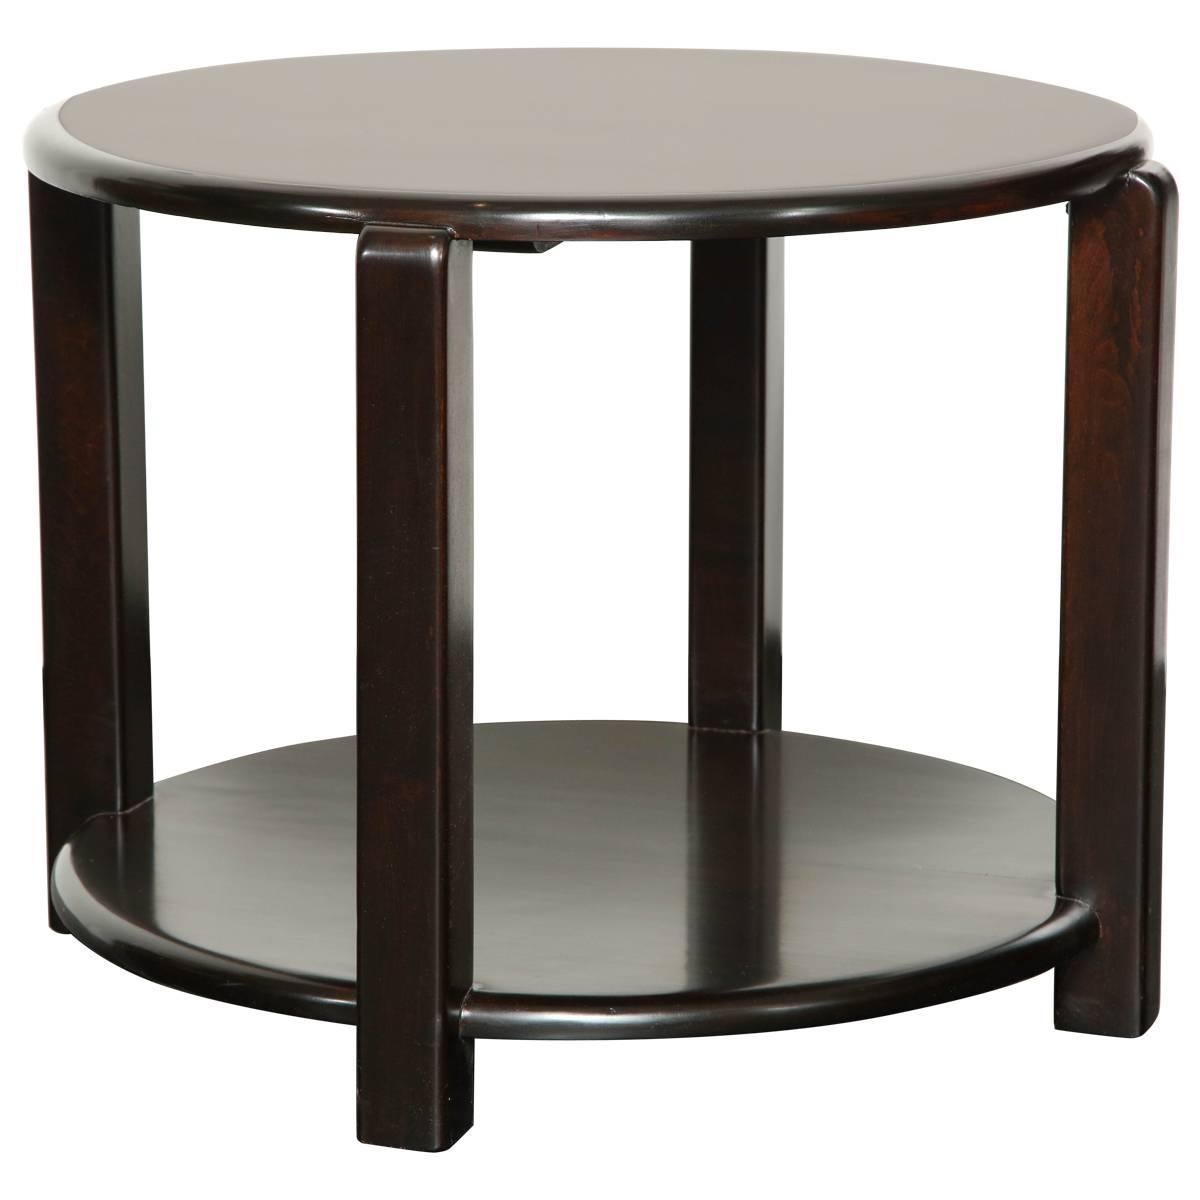 Mid-20th Century Two-Tier Ebonized Walnut Circular Table For Sale